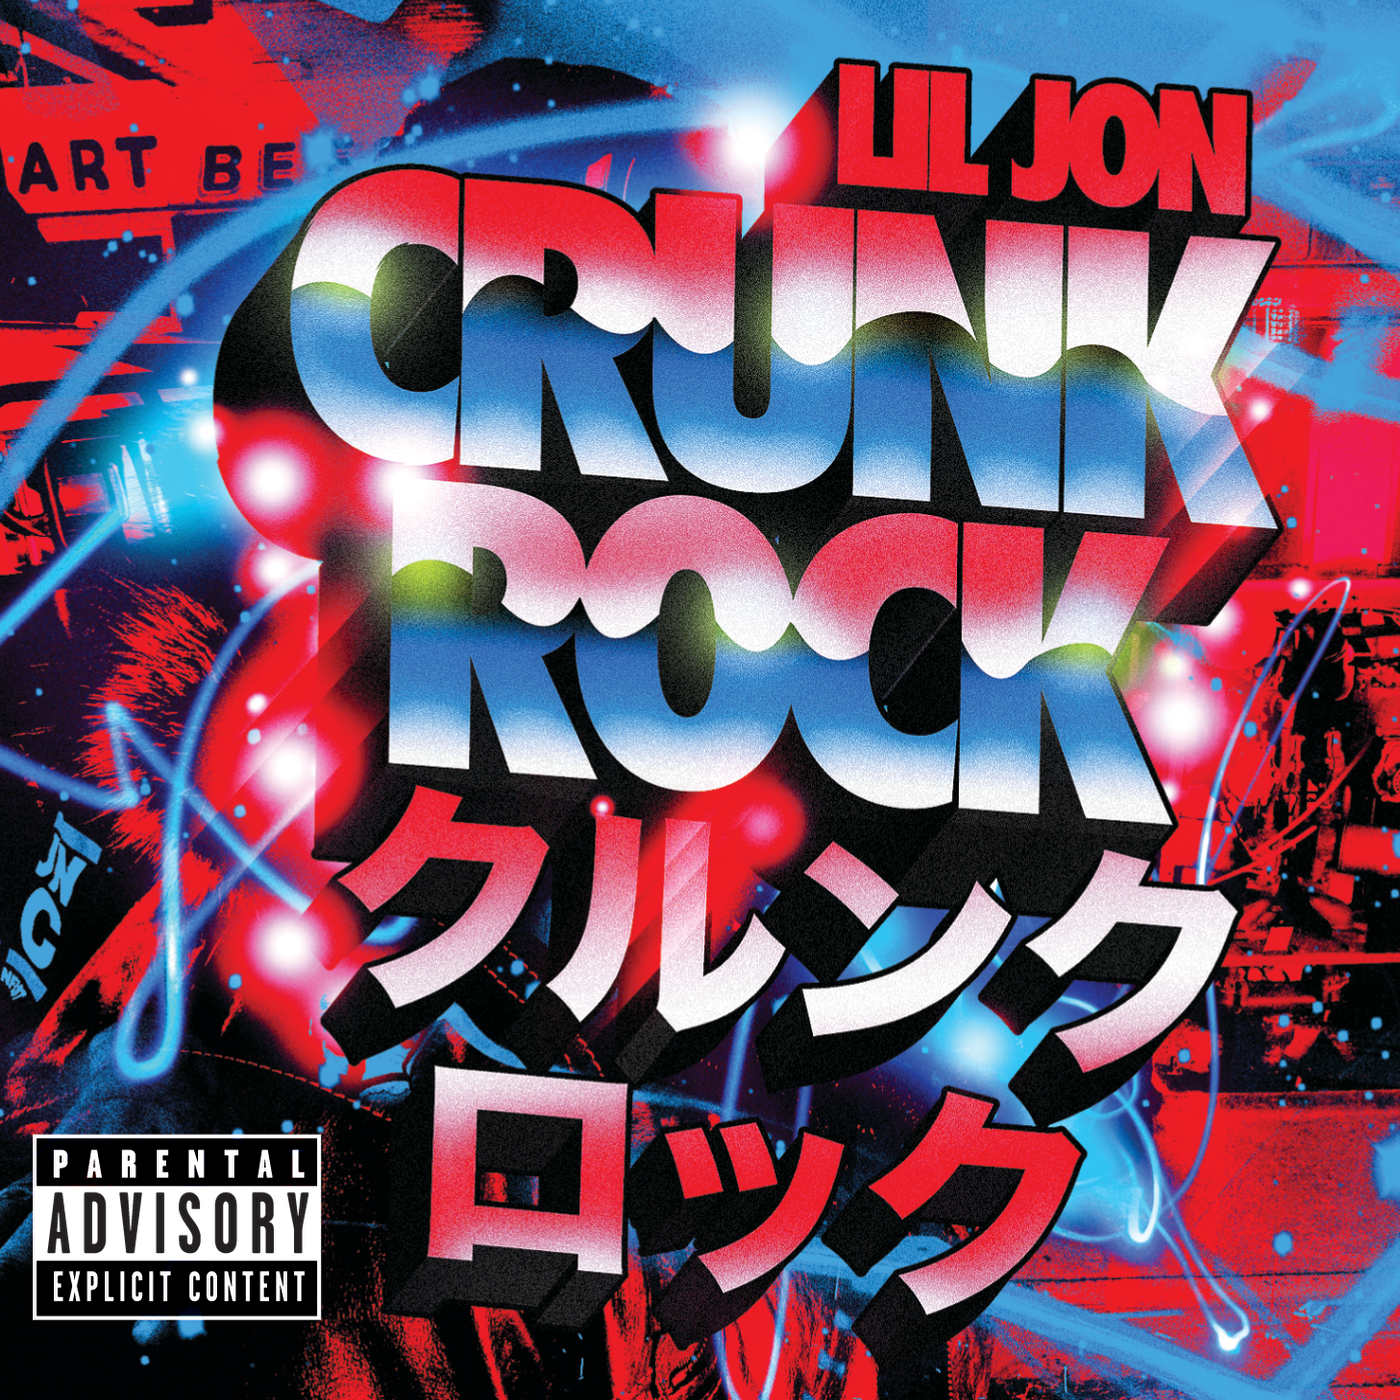 Lil Jon – Shots (feat. LMFAO)